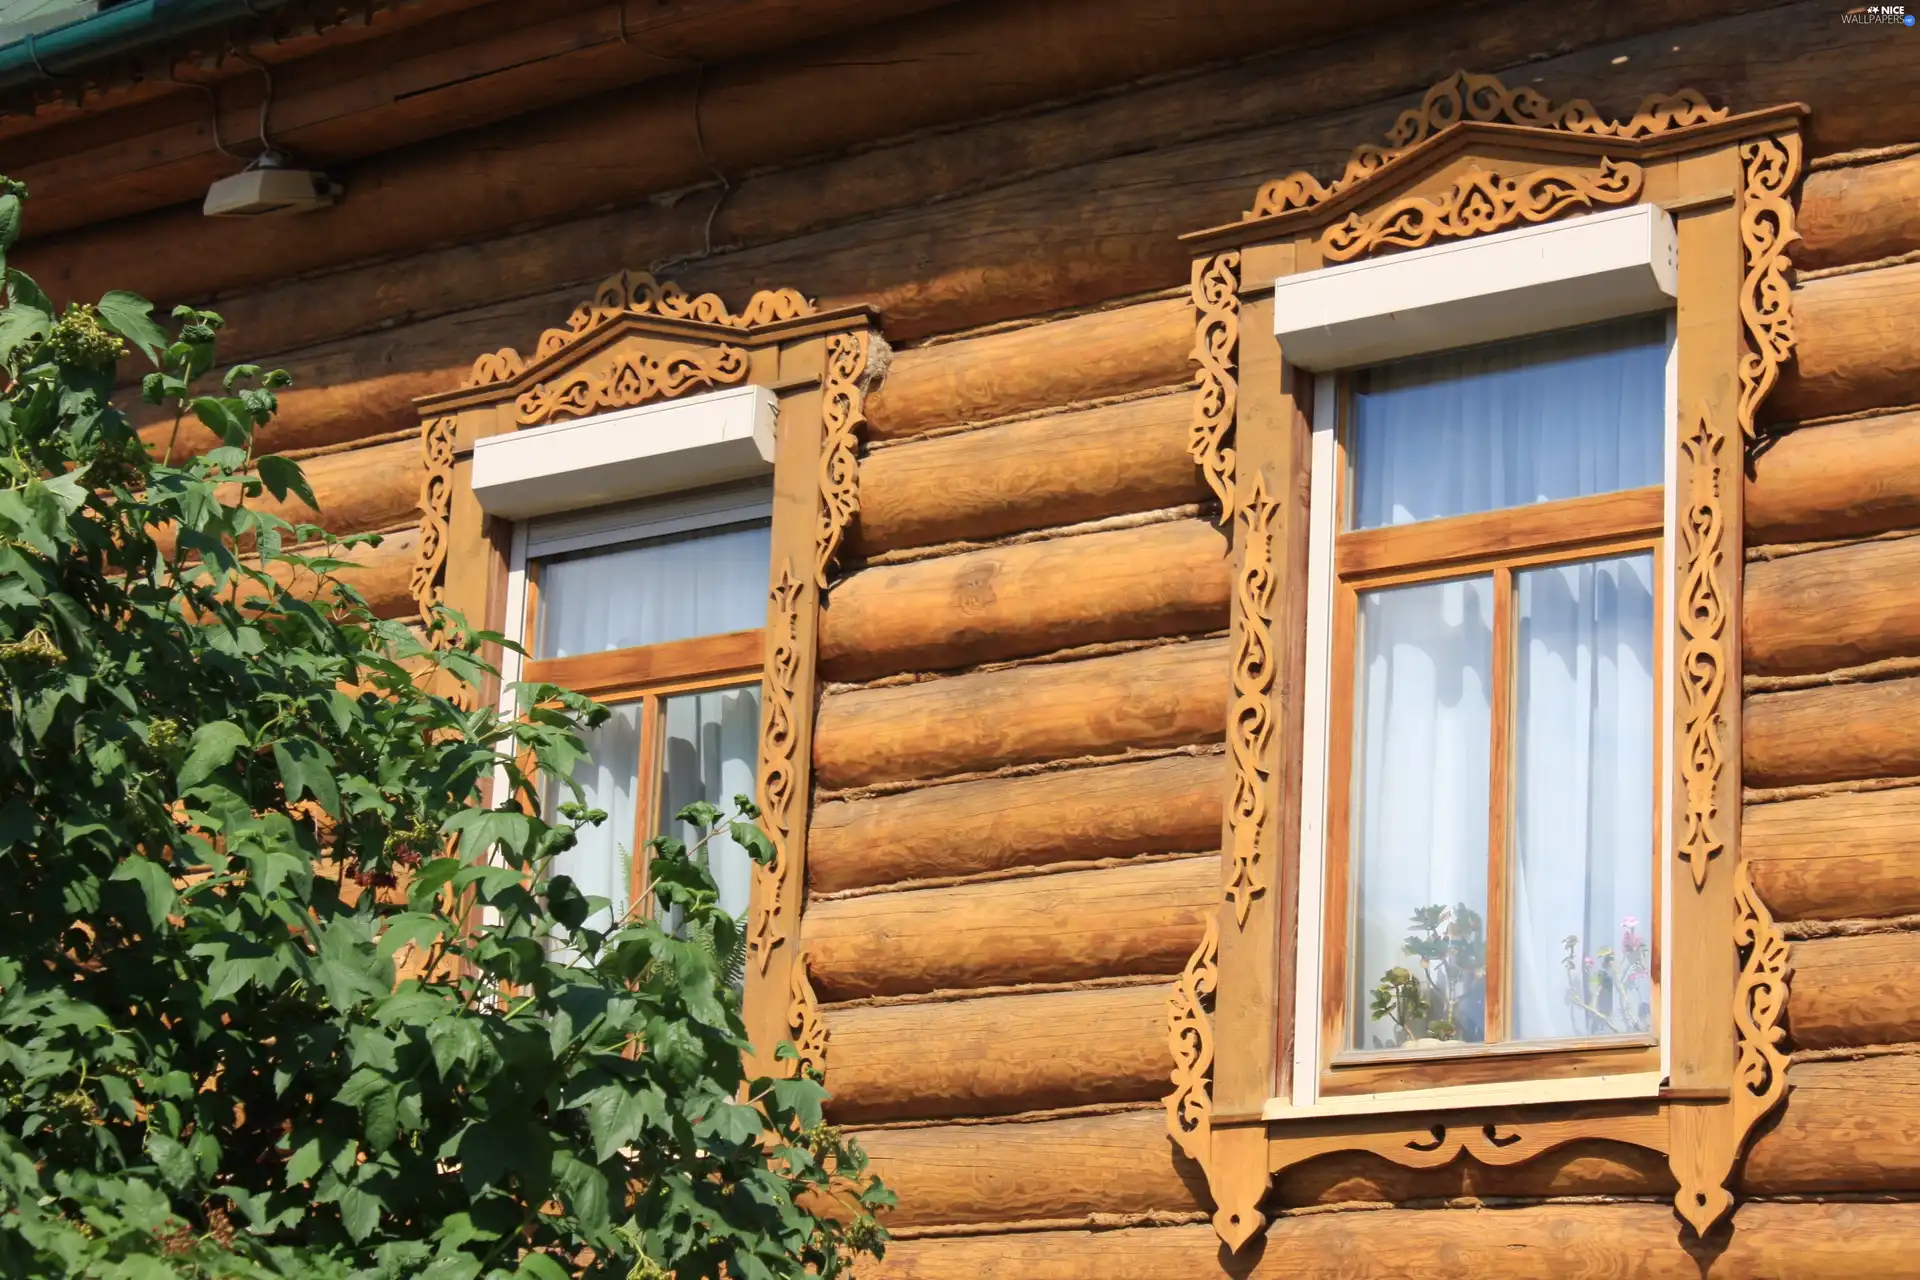 Windows, house, wooden